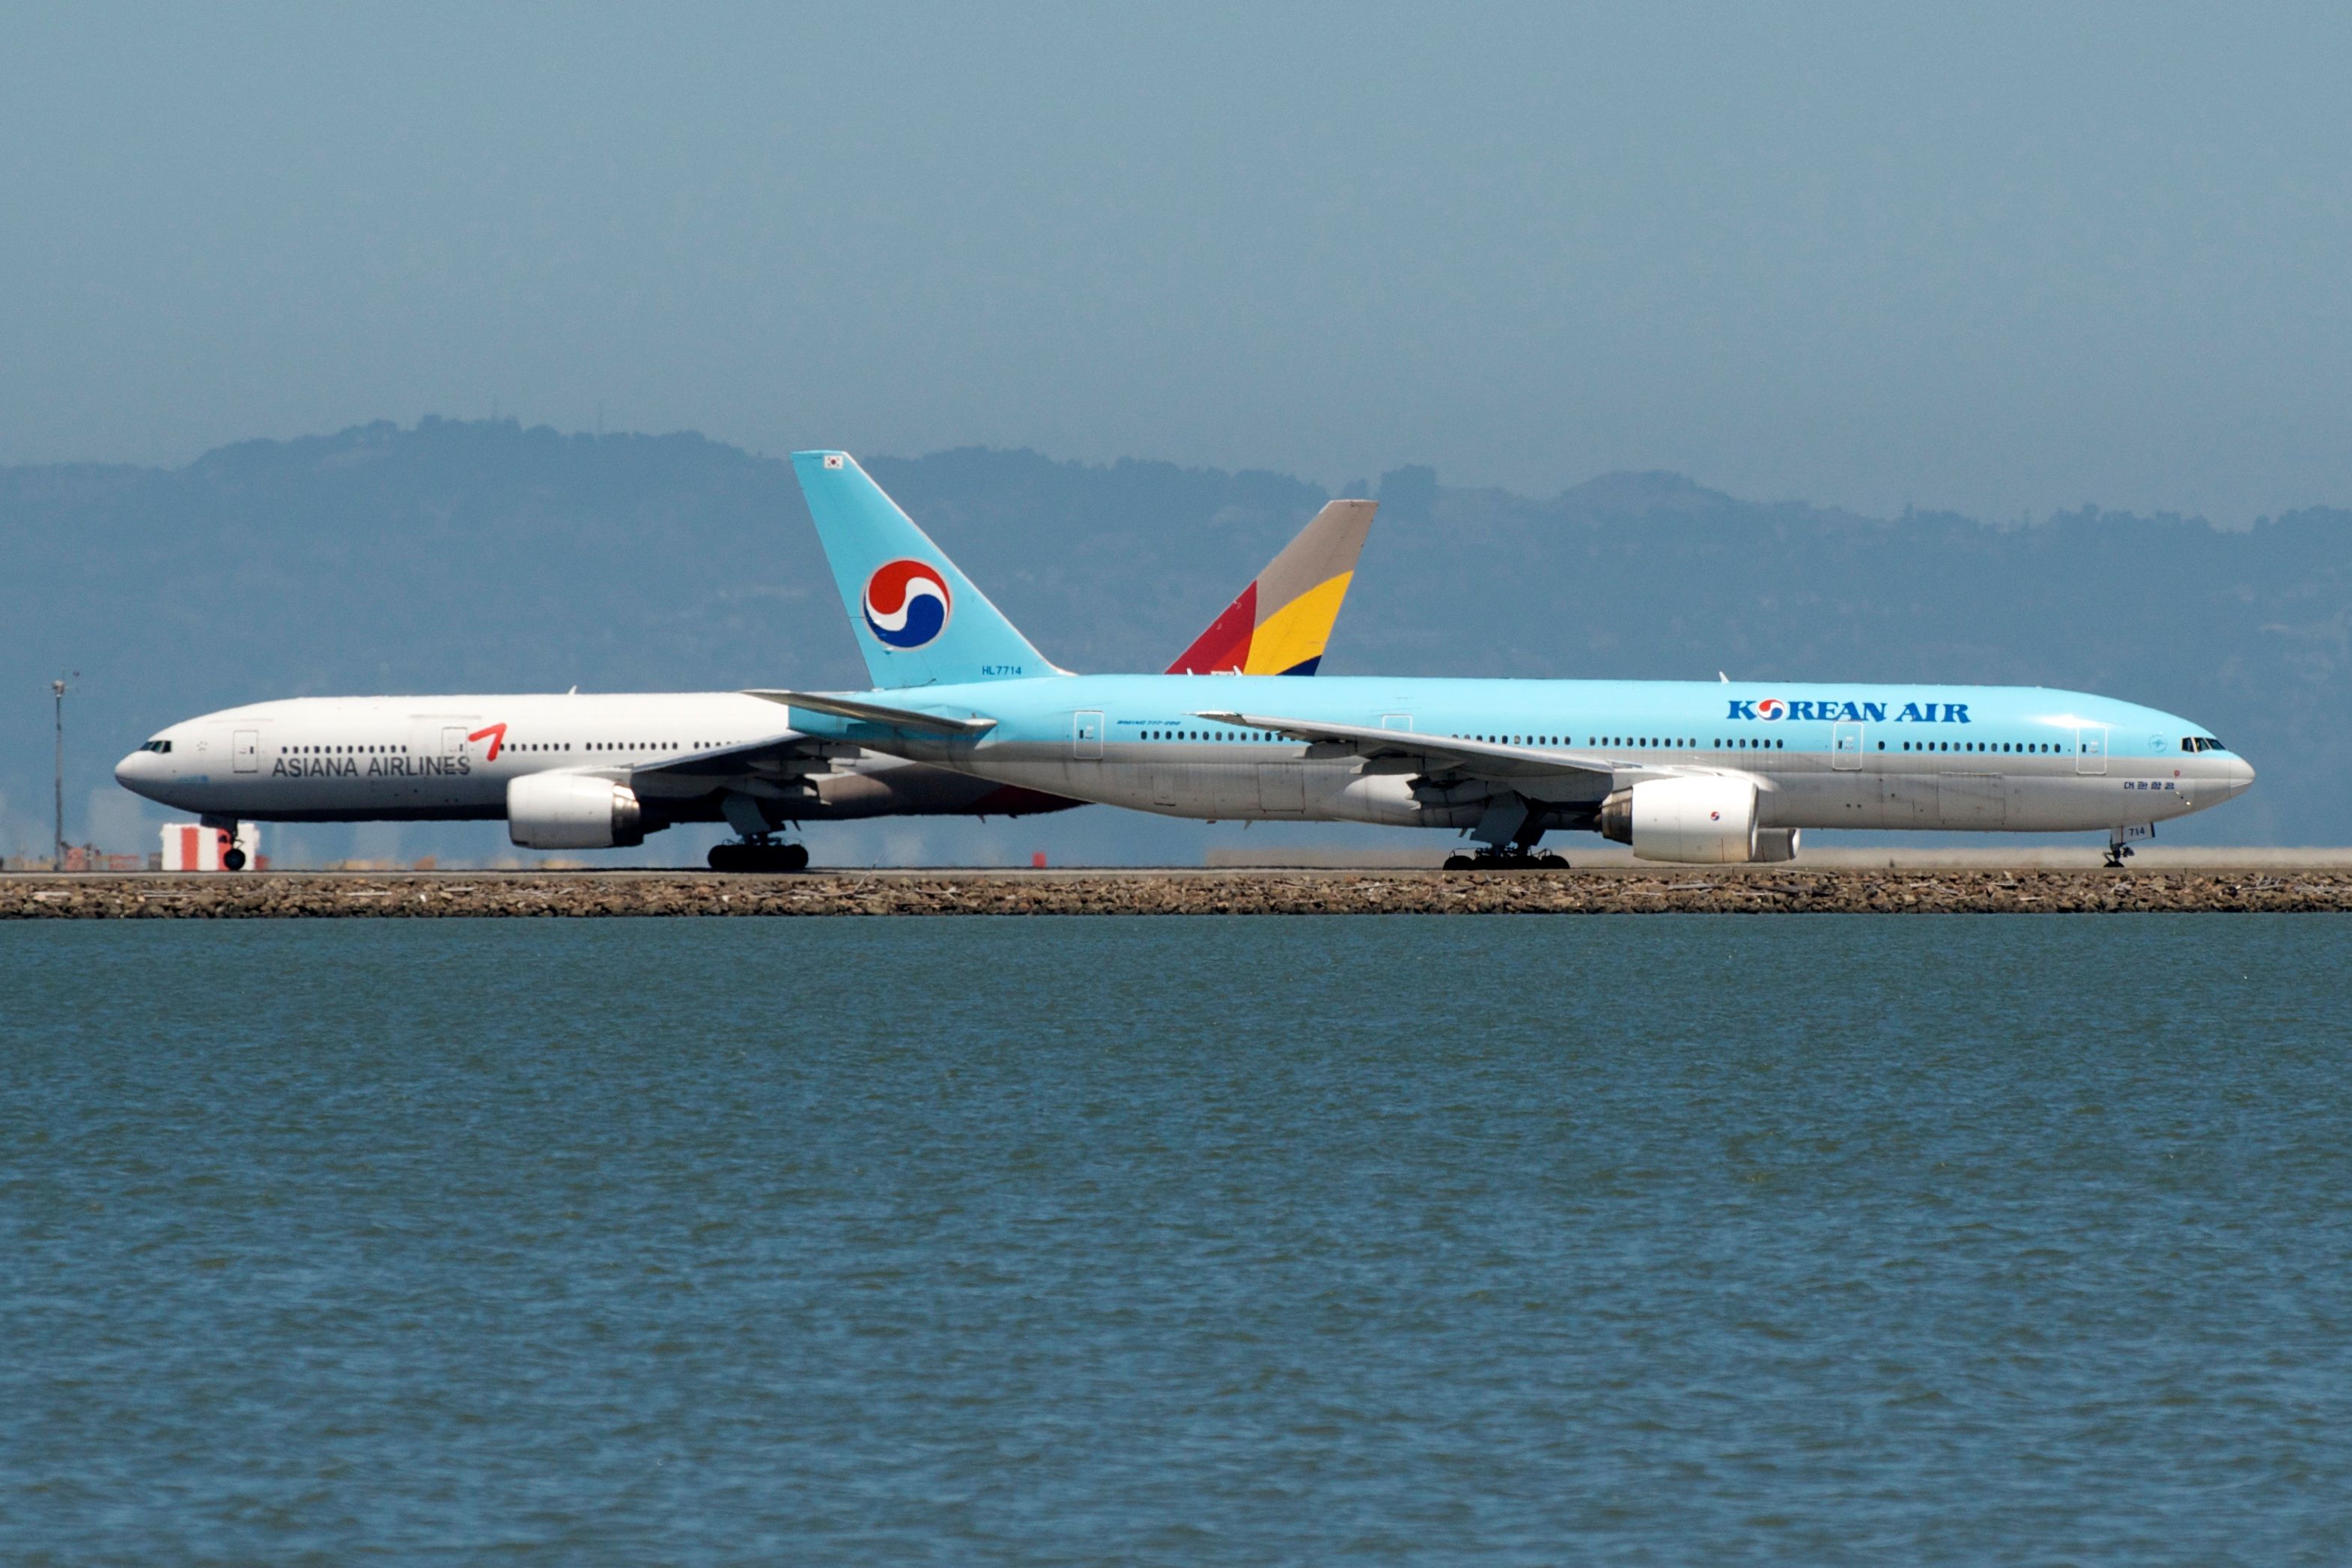 Asiana Airlines and Korean Air aircraft taxiing